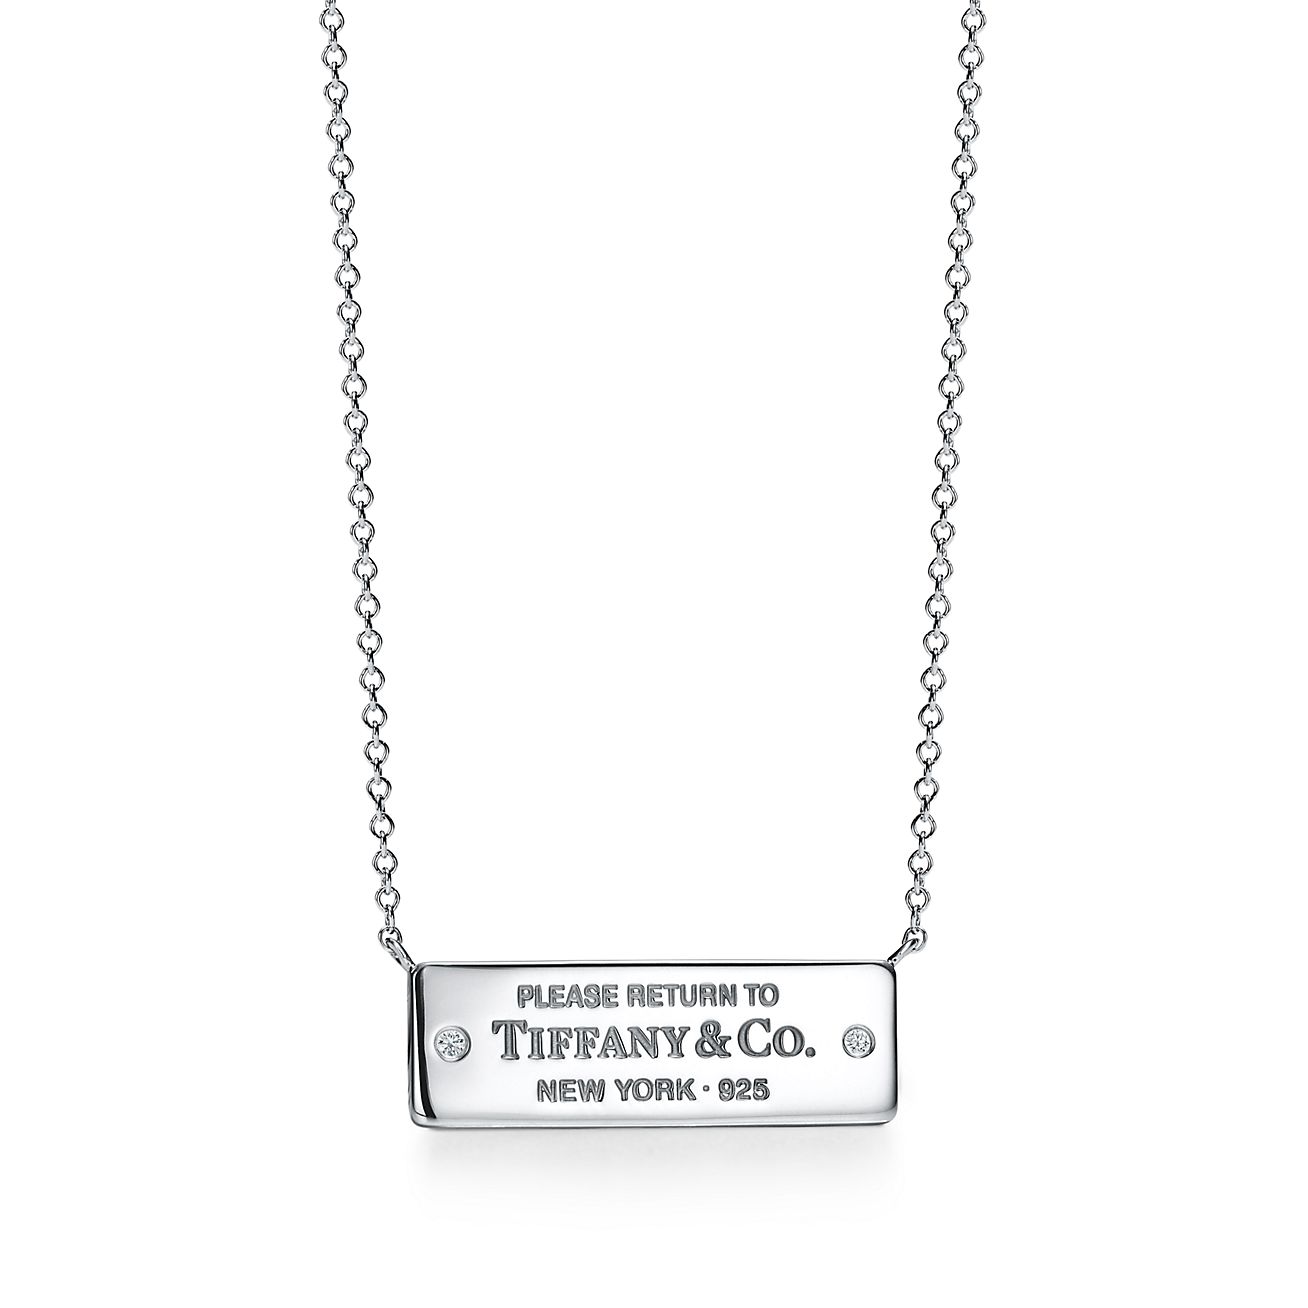 tiffany sterling silver chain